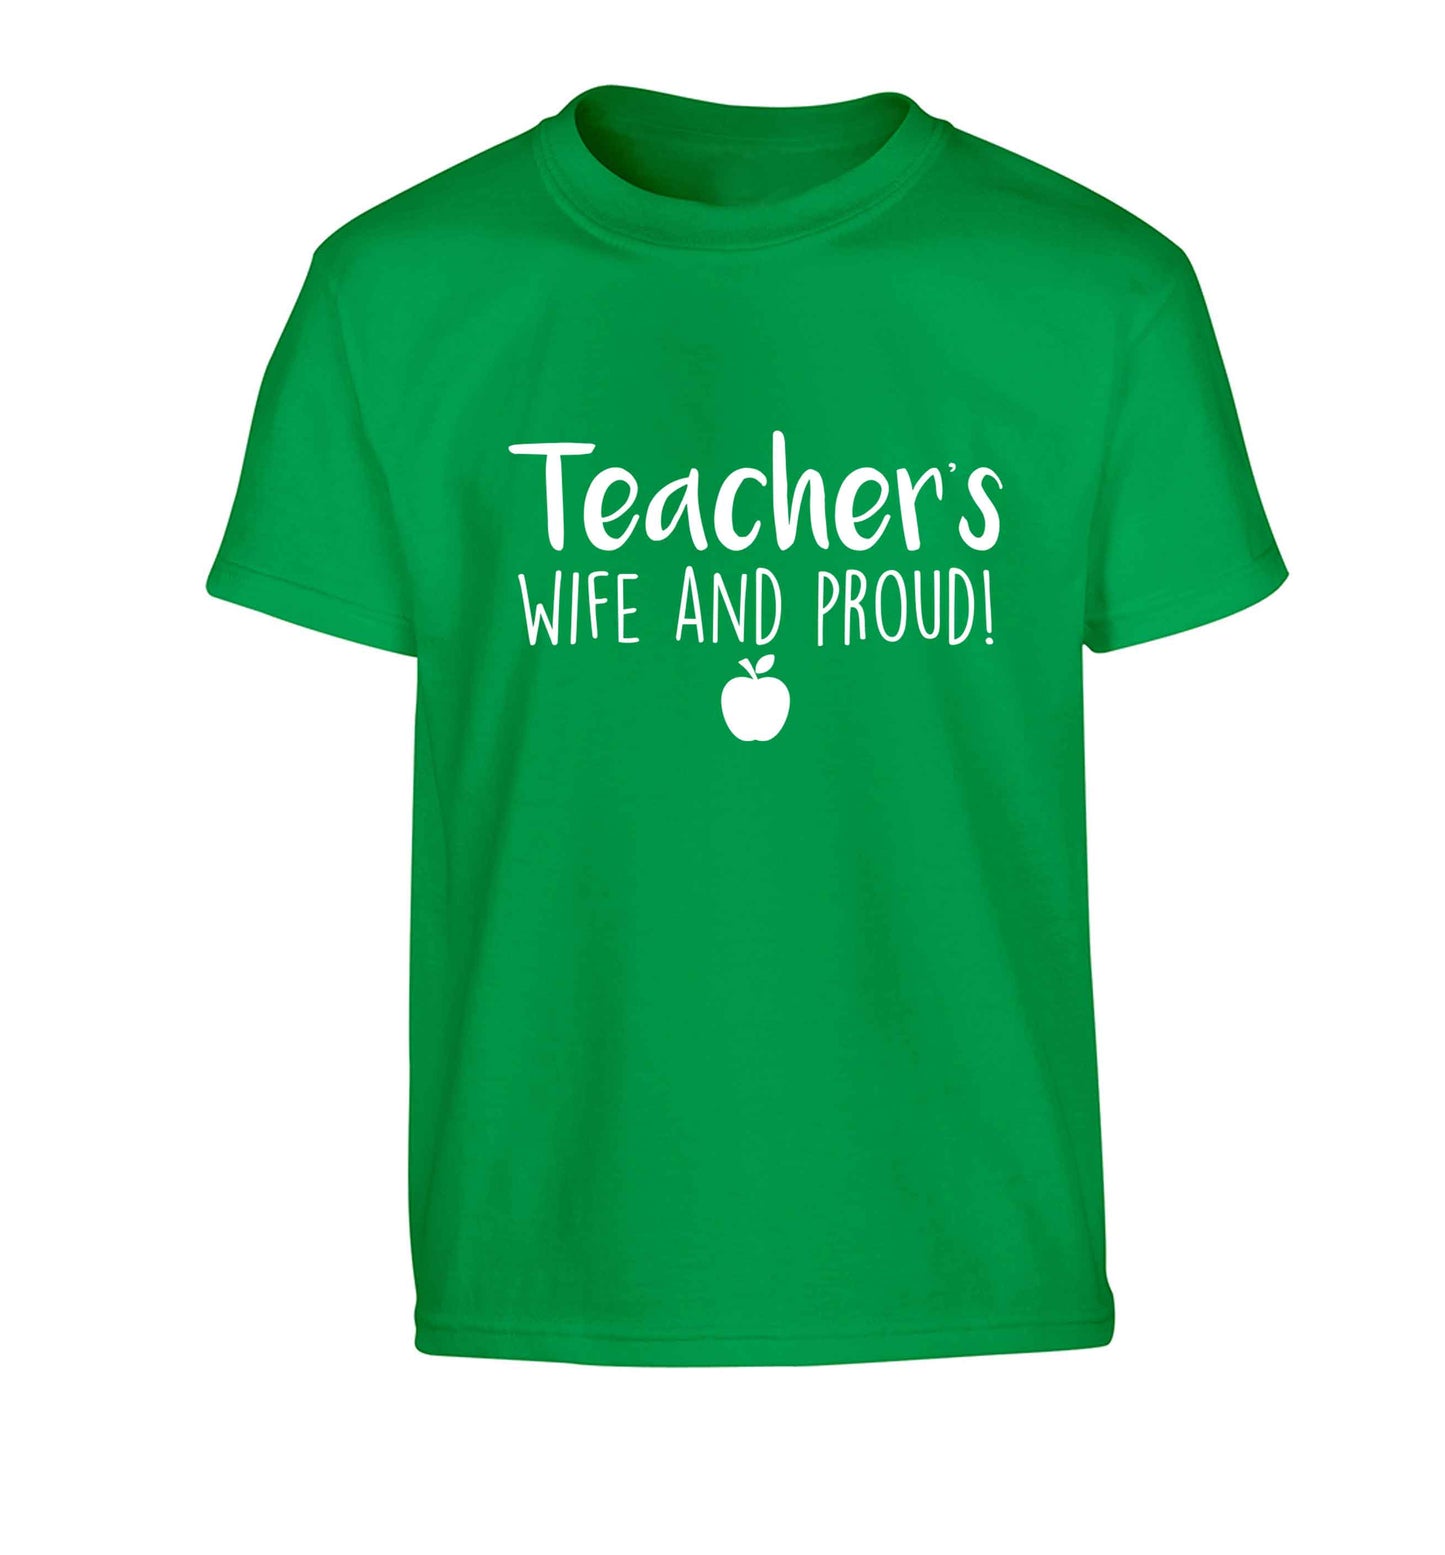 Teachers wife and proud Children's green Tshirt 12-13 Years